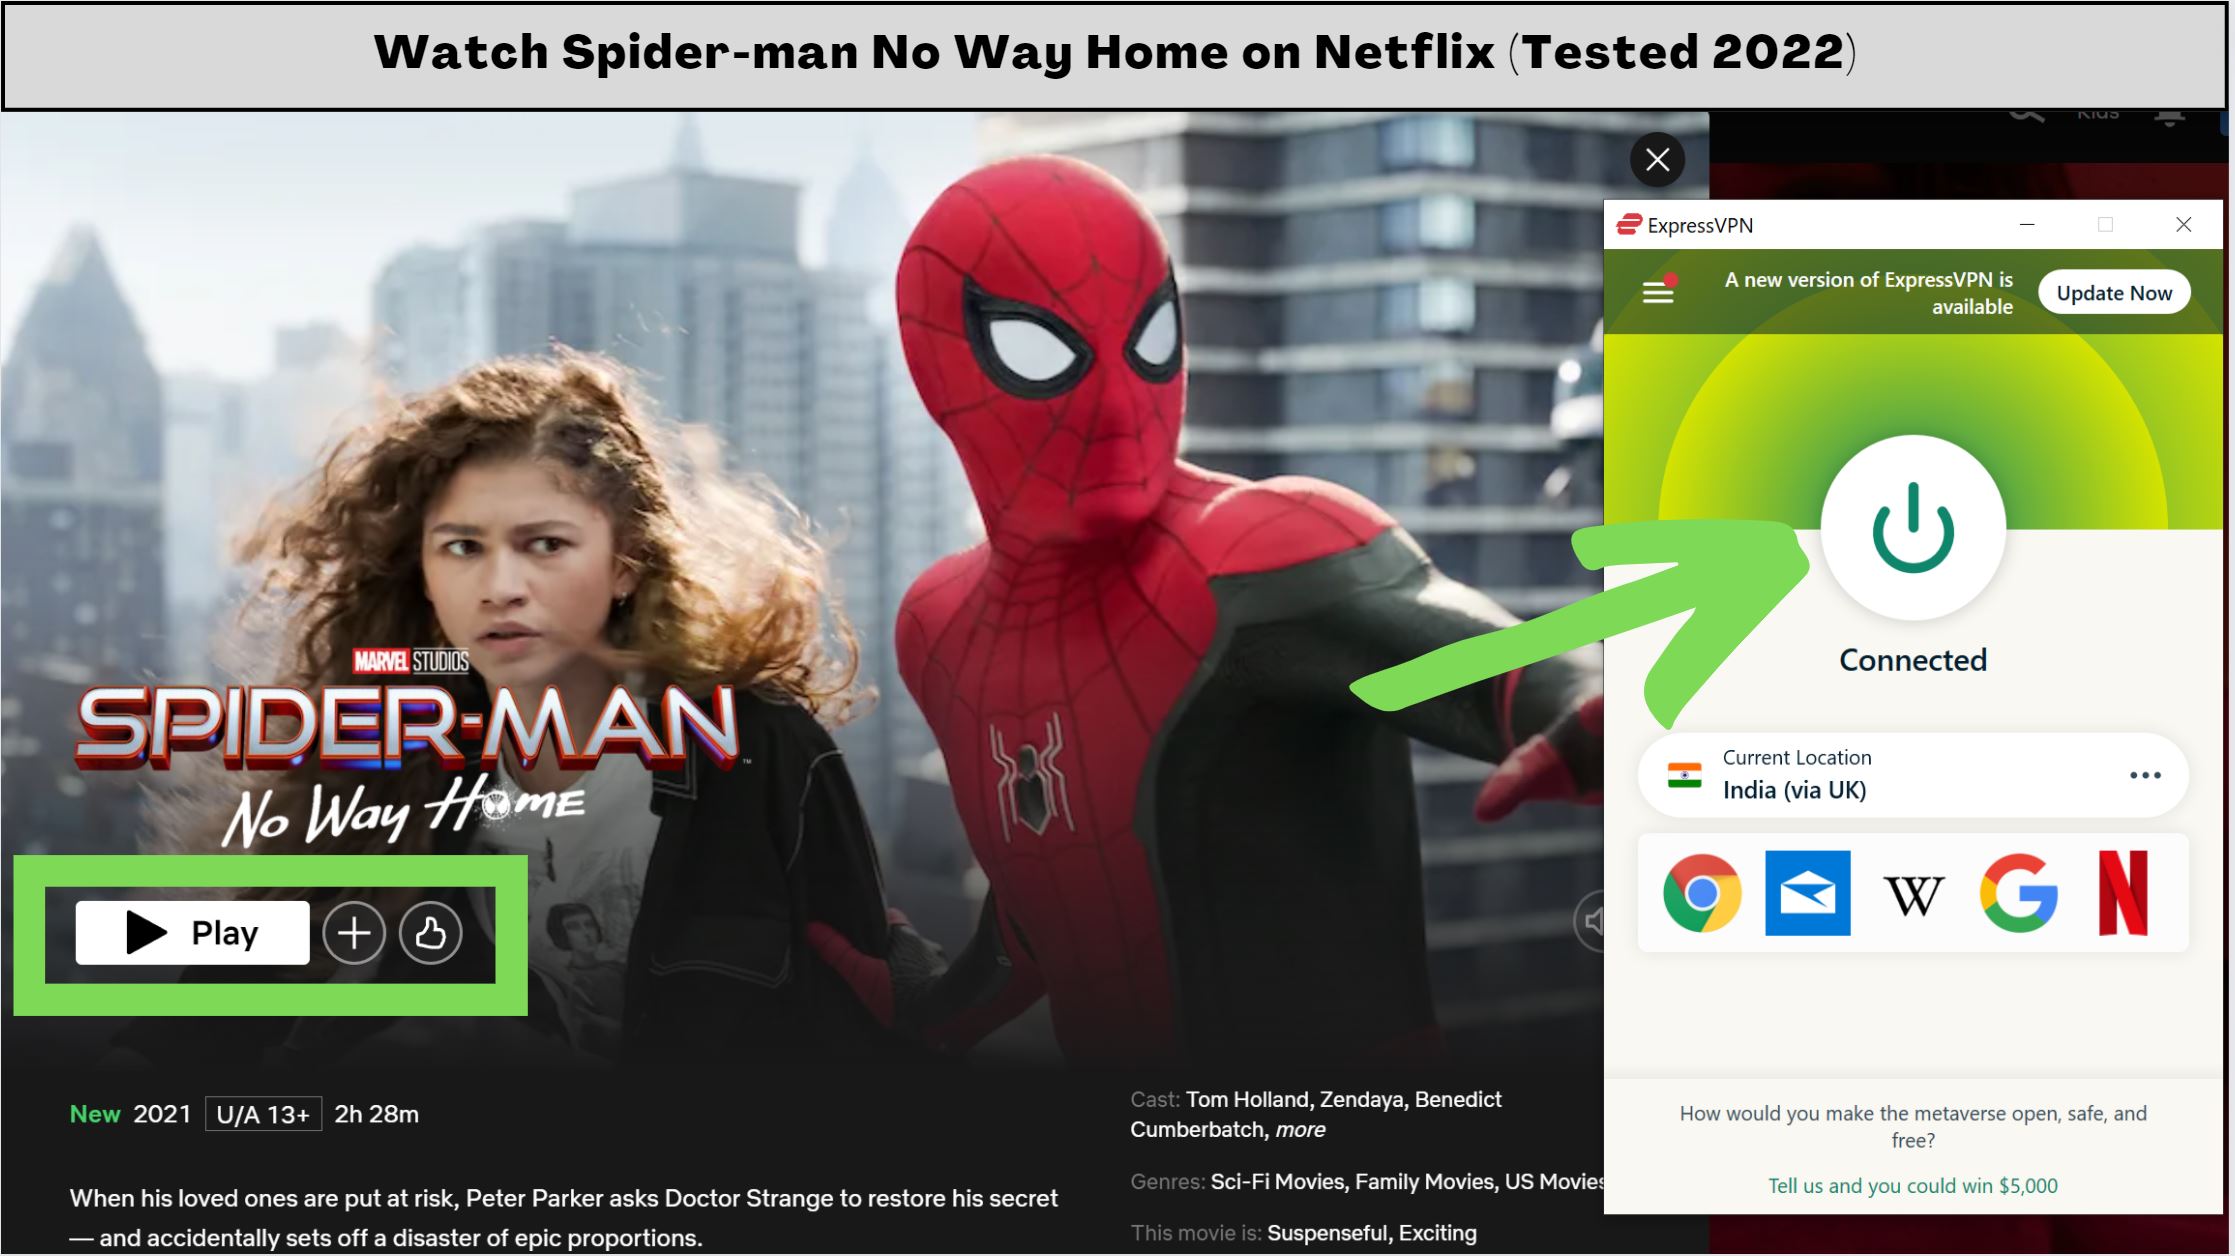 Spiderman No Way Home on Netflix